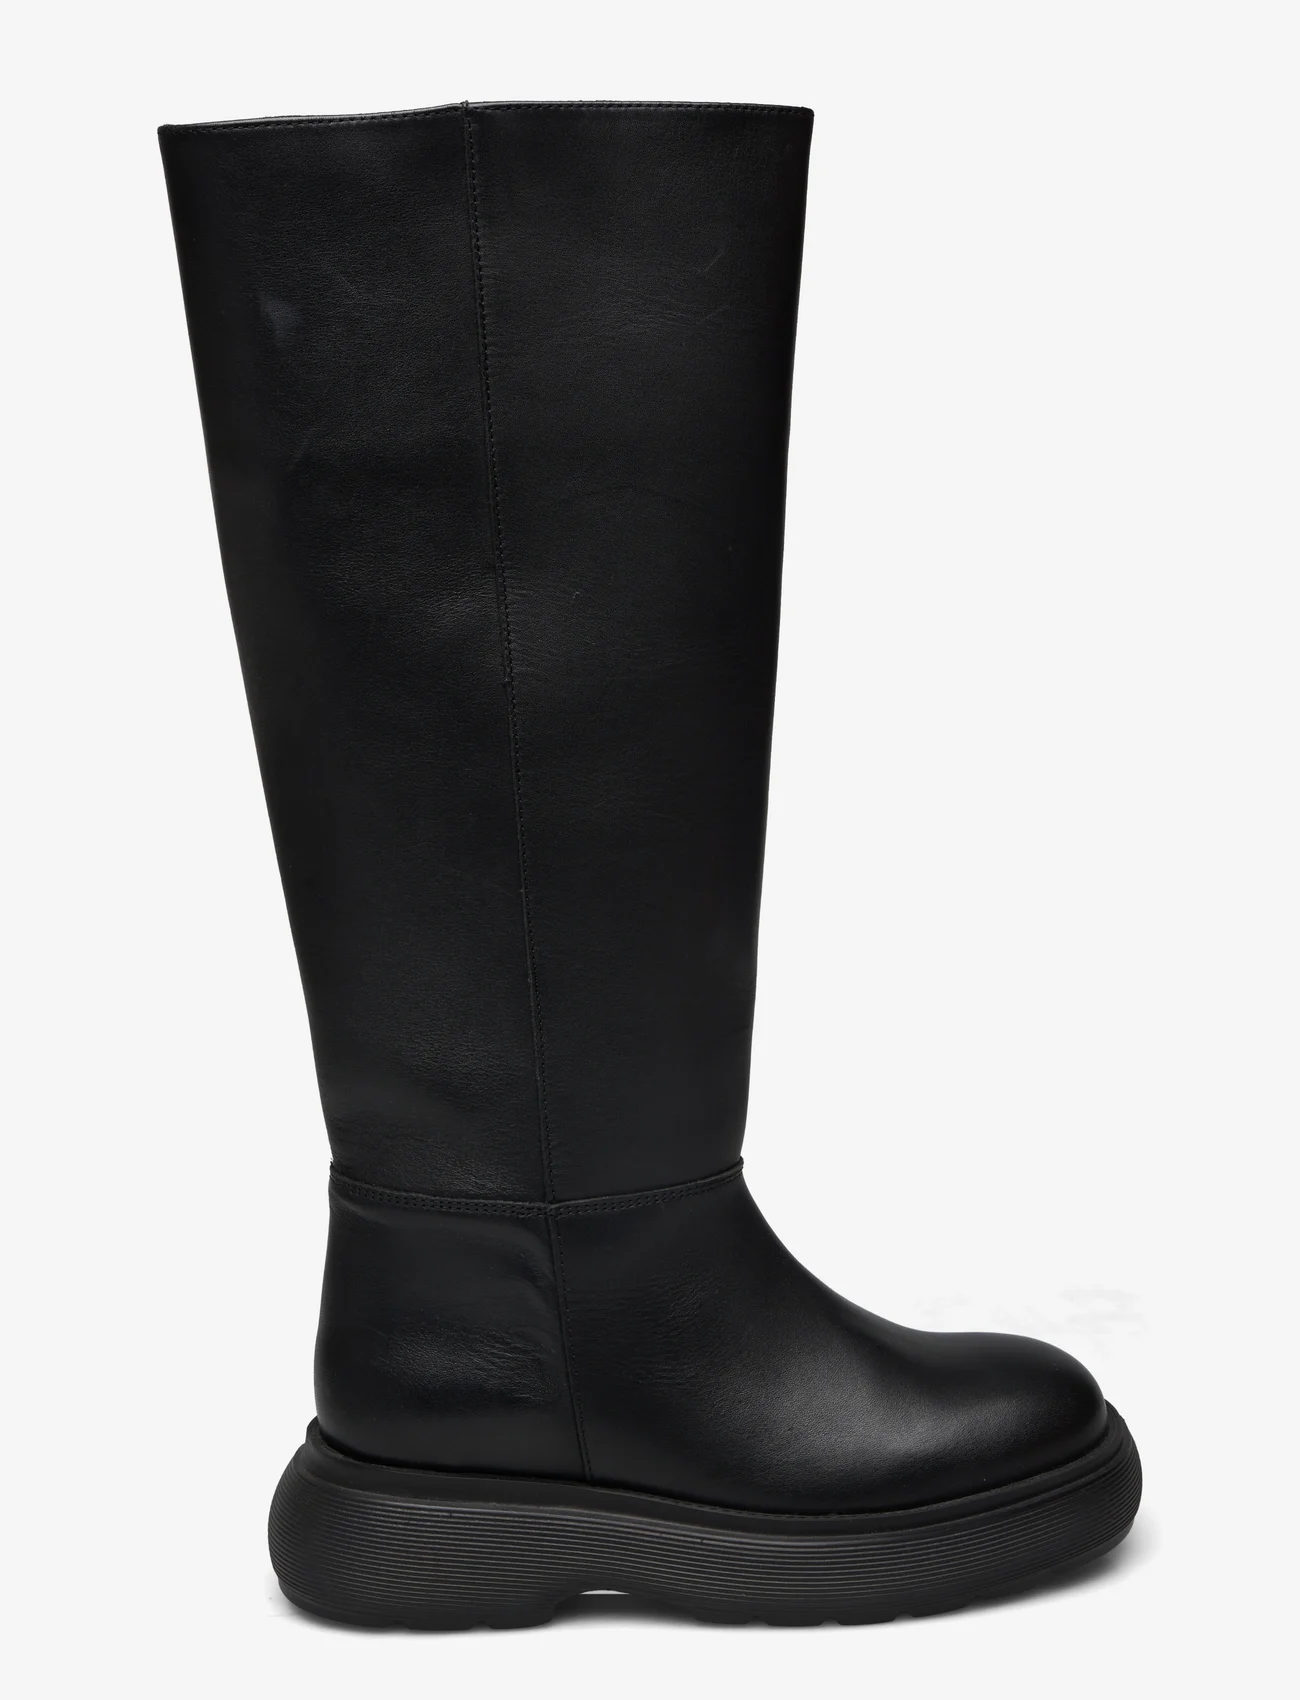 Garment Project - Cloud High Boot - Black Leather - sievietēm - black - 1